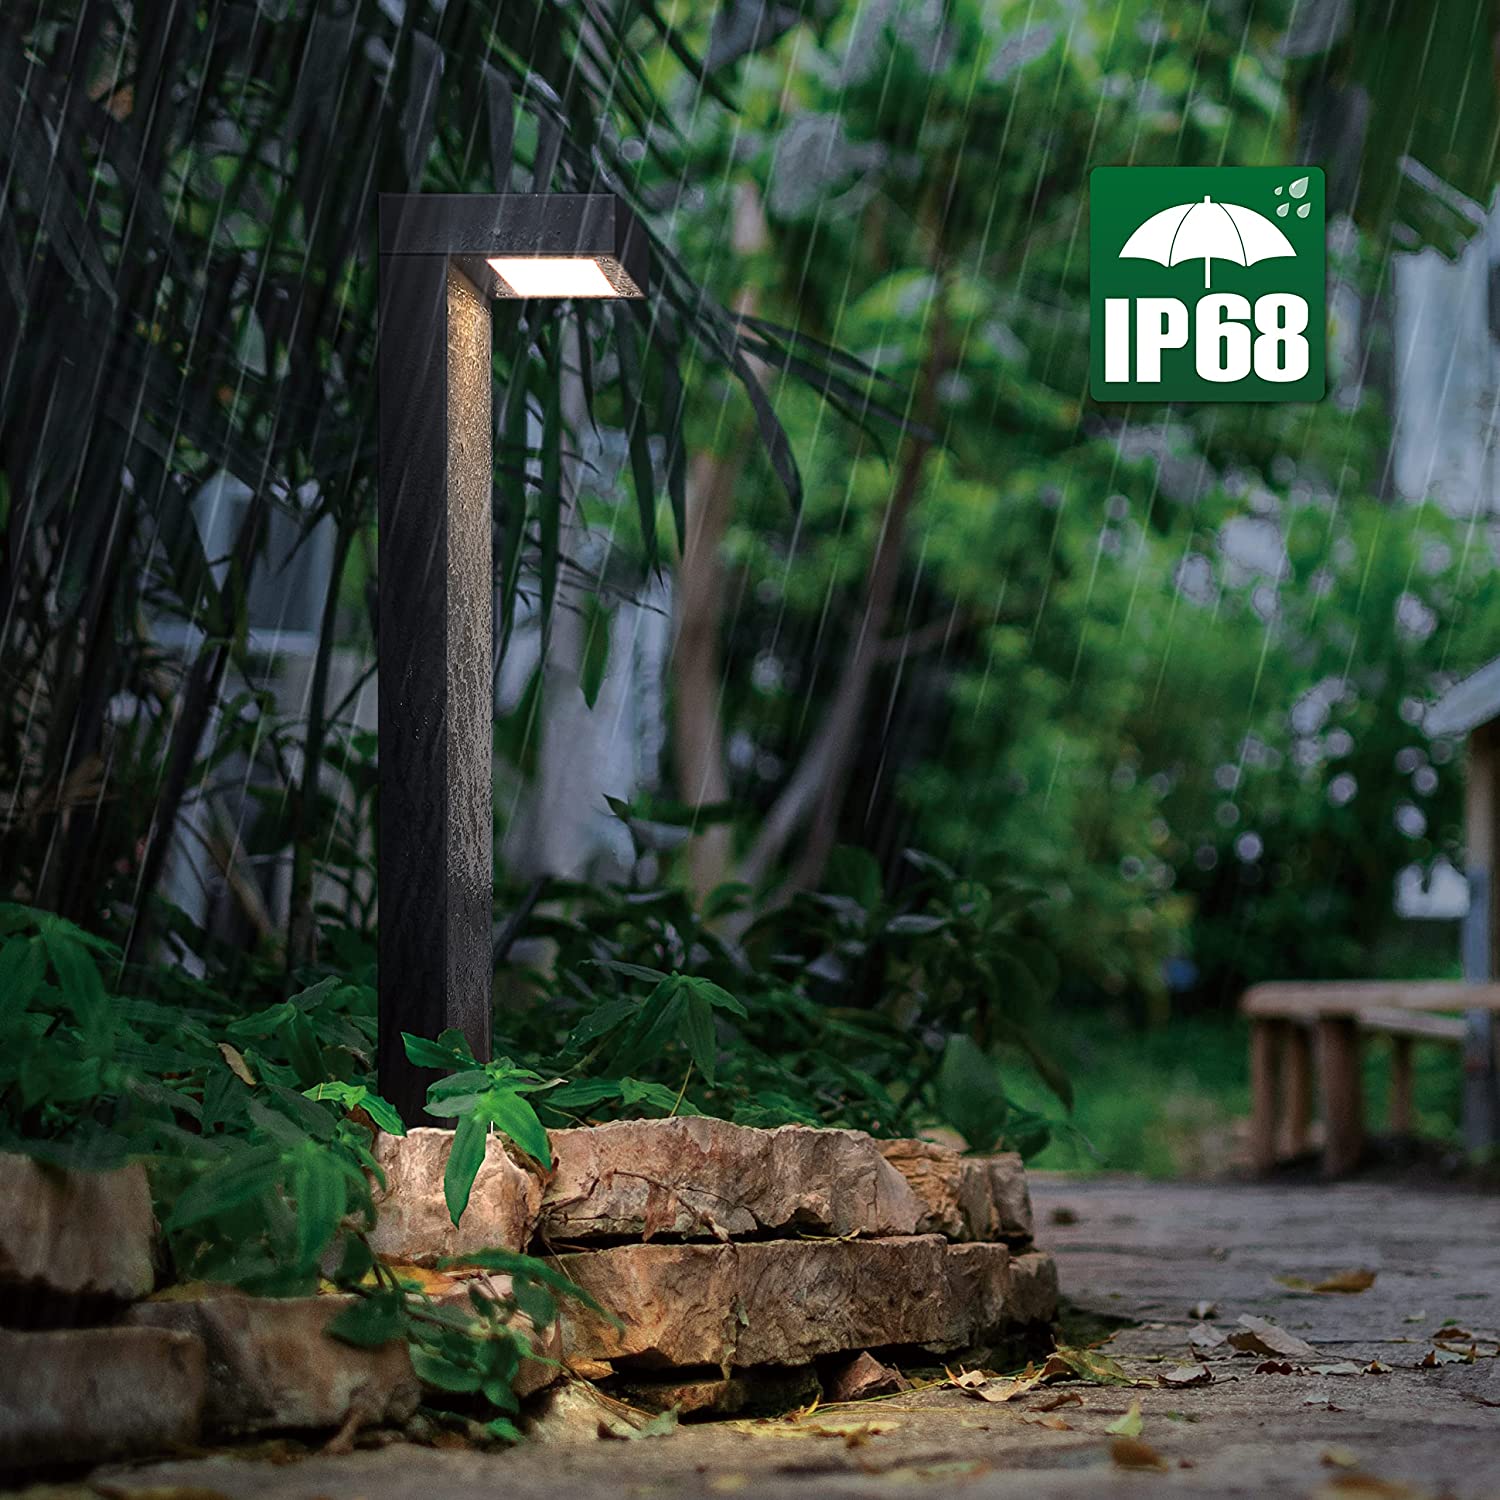 ABBA Lighting USA, ALP19 4-Pack 3W LED Landscape Pathway Light Package, 12V Low Voltage Modern Path Lights